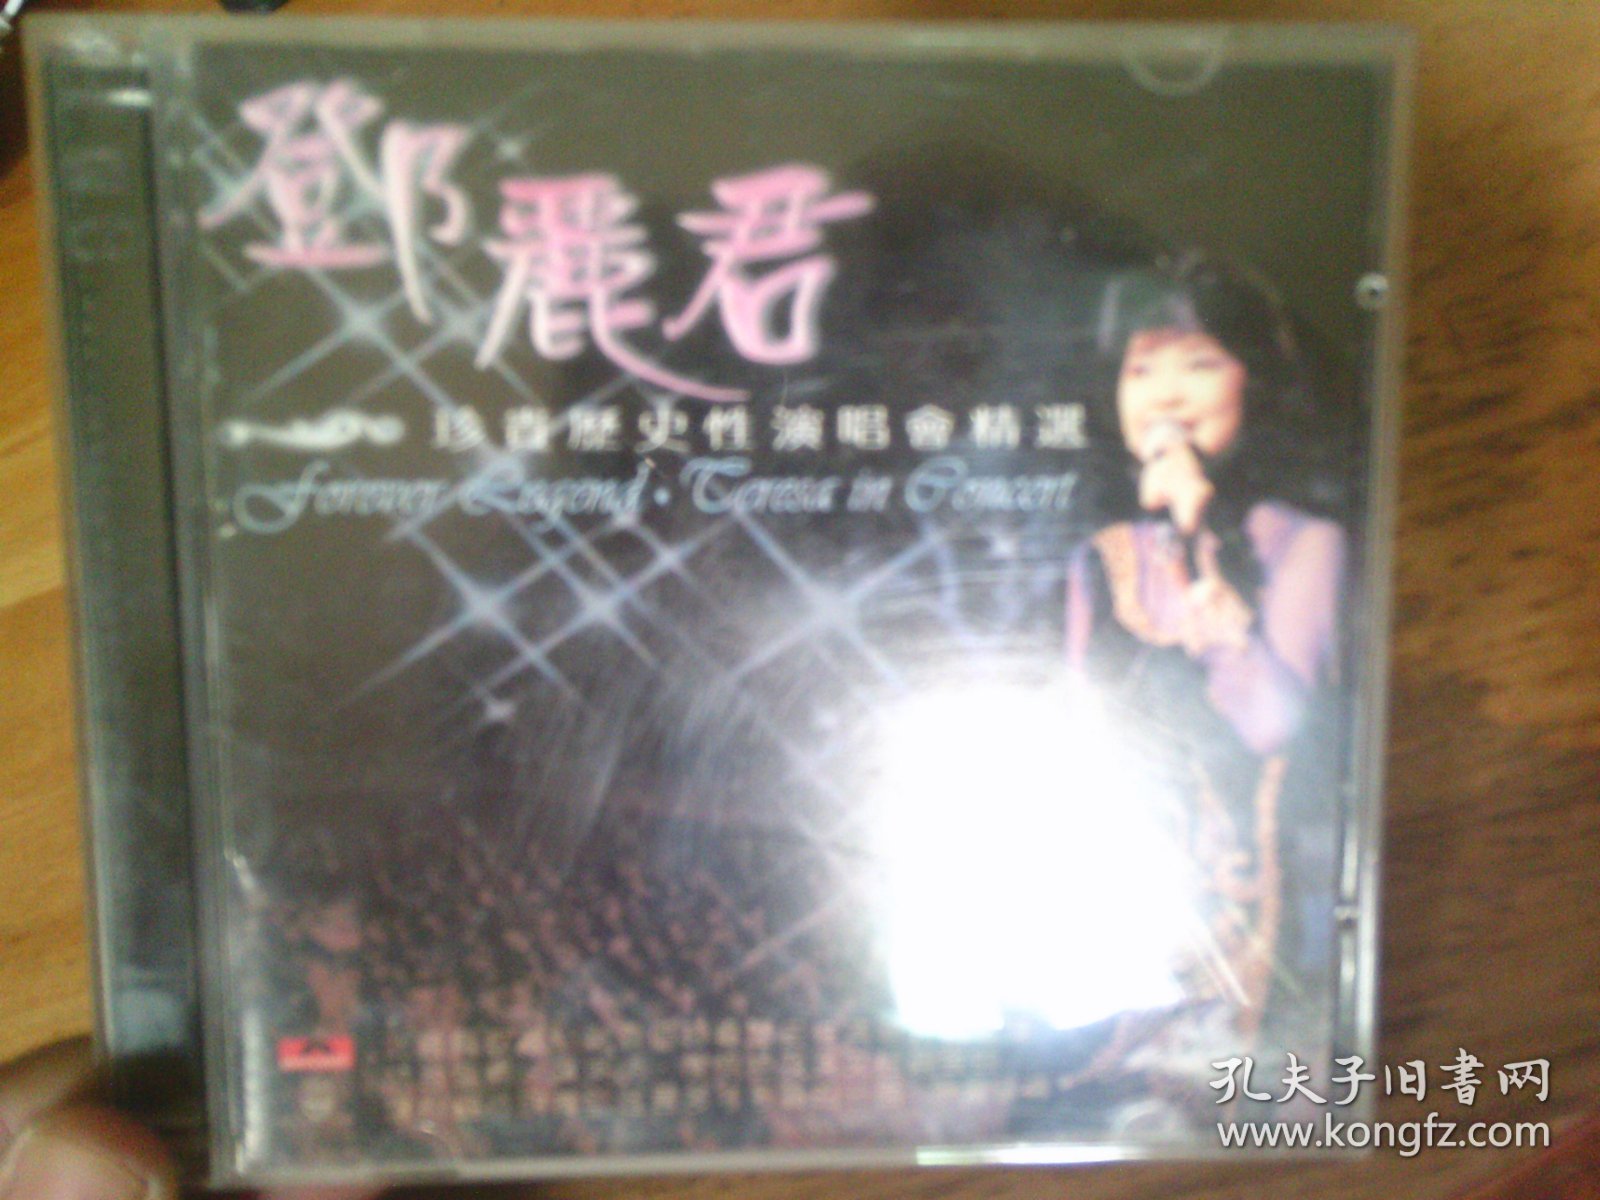 CD： 邓丽君 珍贵历史性演唱会精选  2张CD  二手旧东西,实物拍图,自鉴